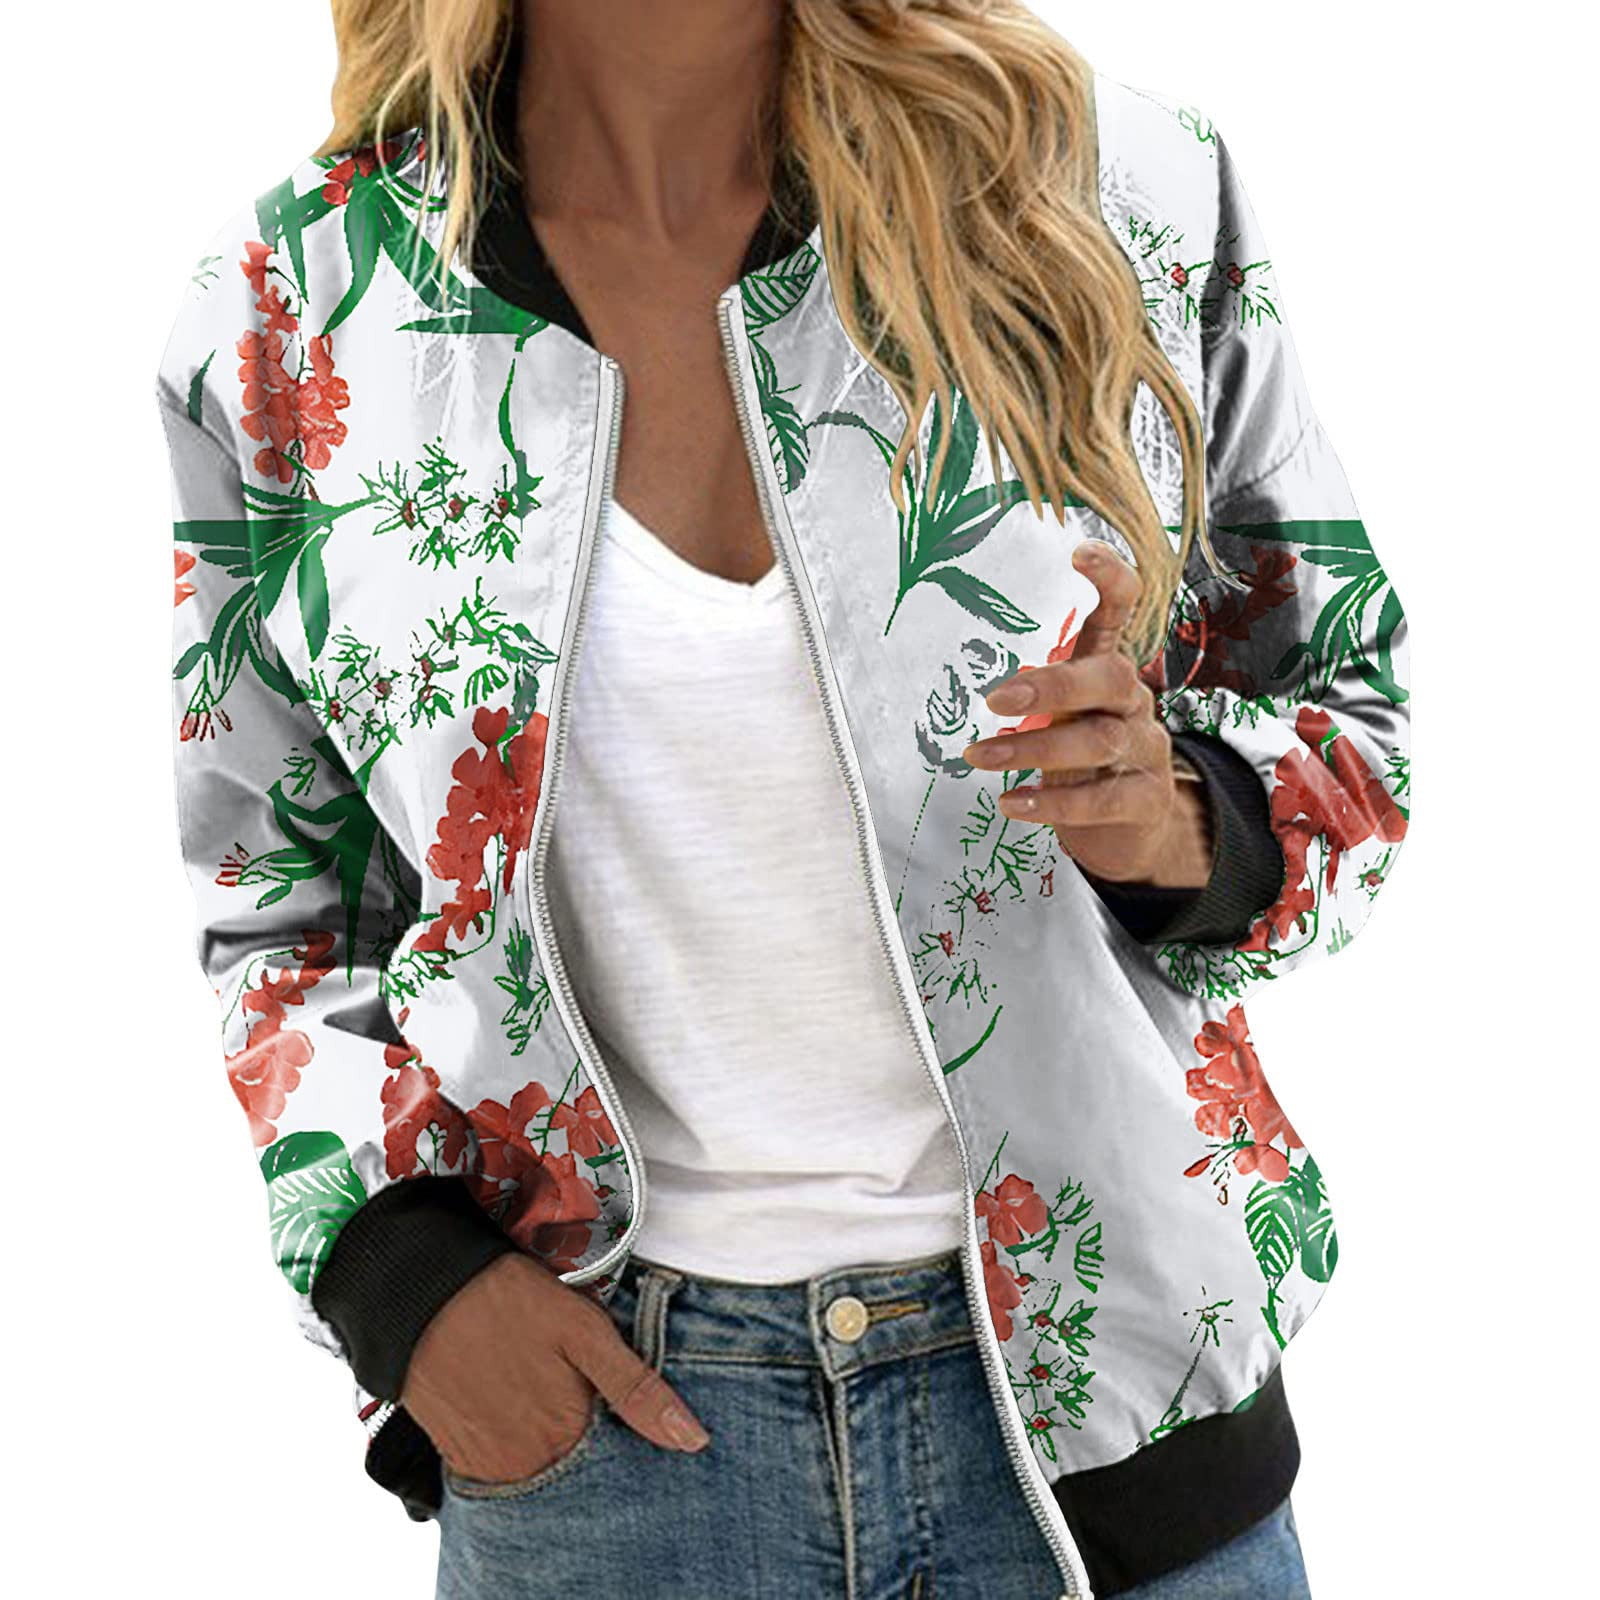 Jikolililili 2022 Women'ss Jackets Floral Print Long Sleeve Zipper Cropped  Lightweight Stand Collar Outwear Tops Coat Women's Outerwear on Clearance